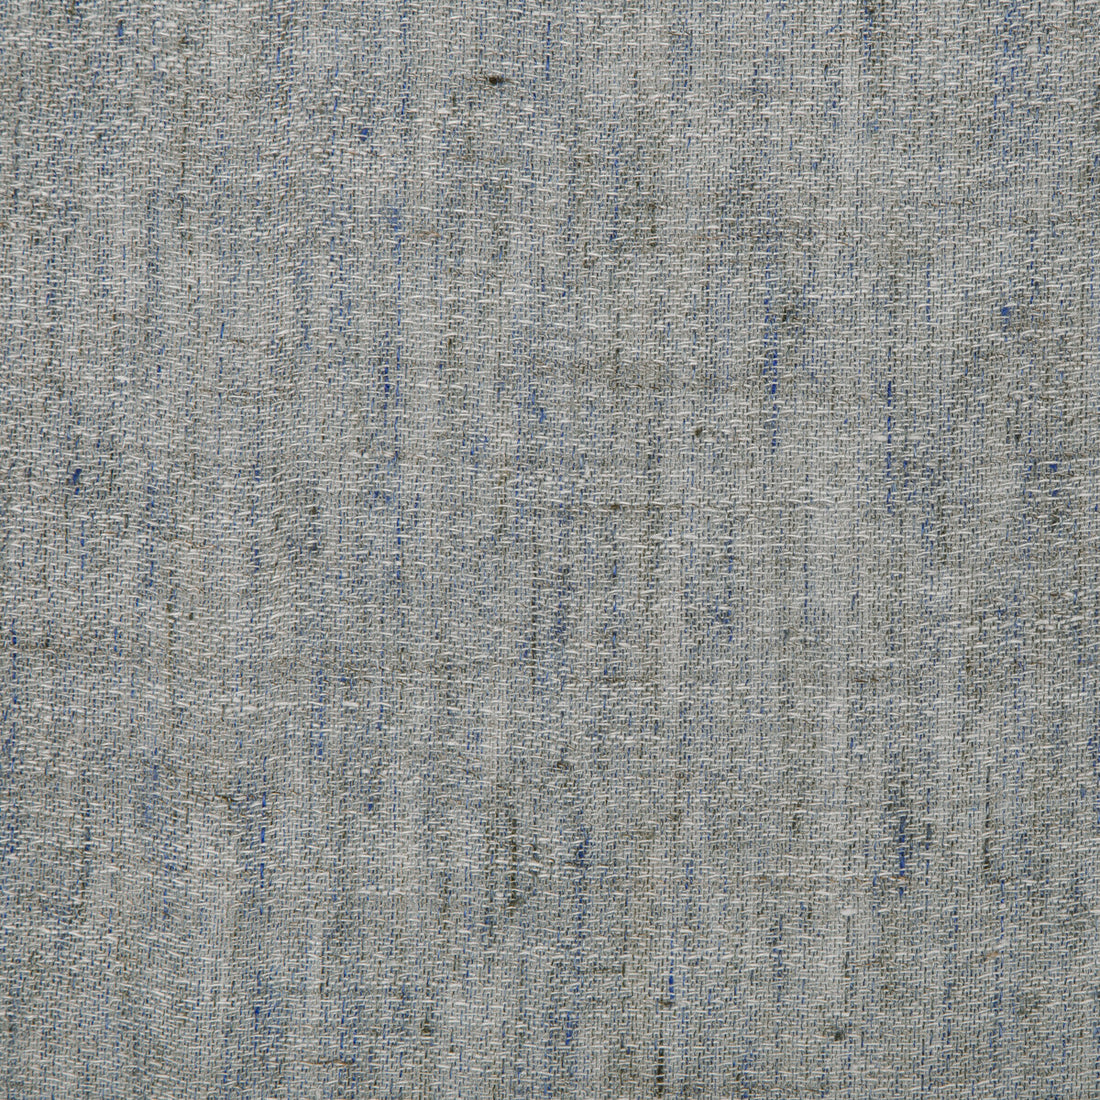 Amalgam Linen fabric in denim color - pattern 4614.15.0 - by Kravet Design in the Nate Berkus Well-Traveled collection